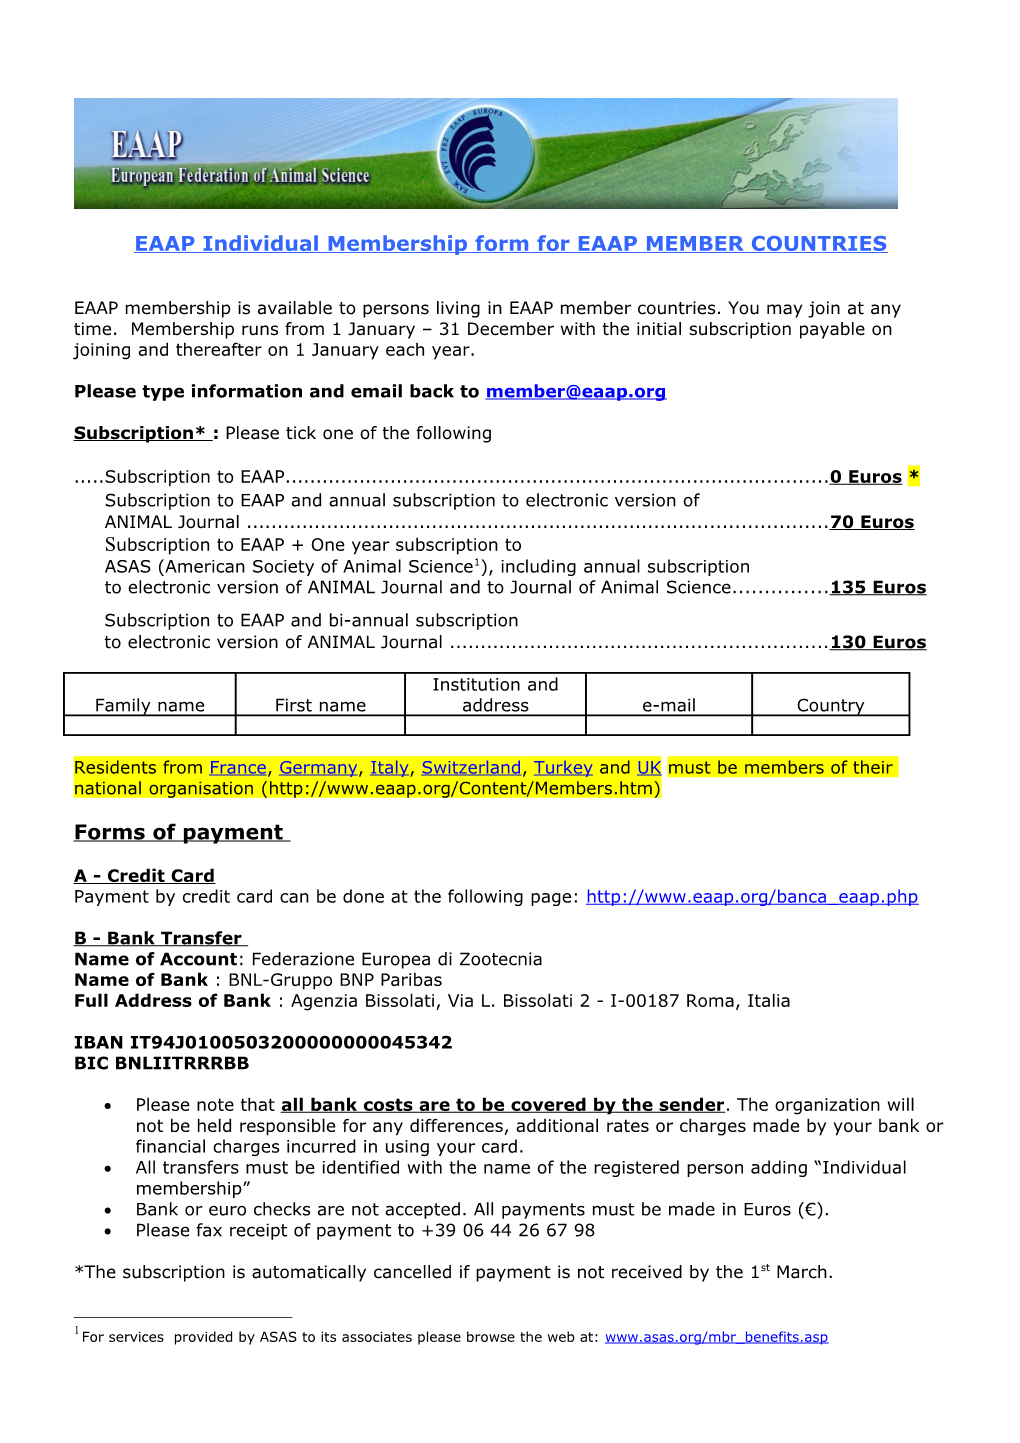 EAAP Individual Membership Form